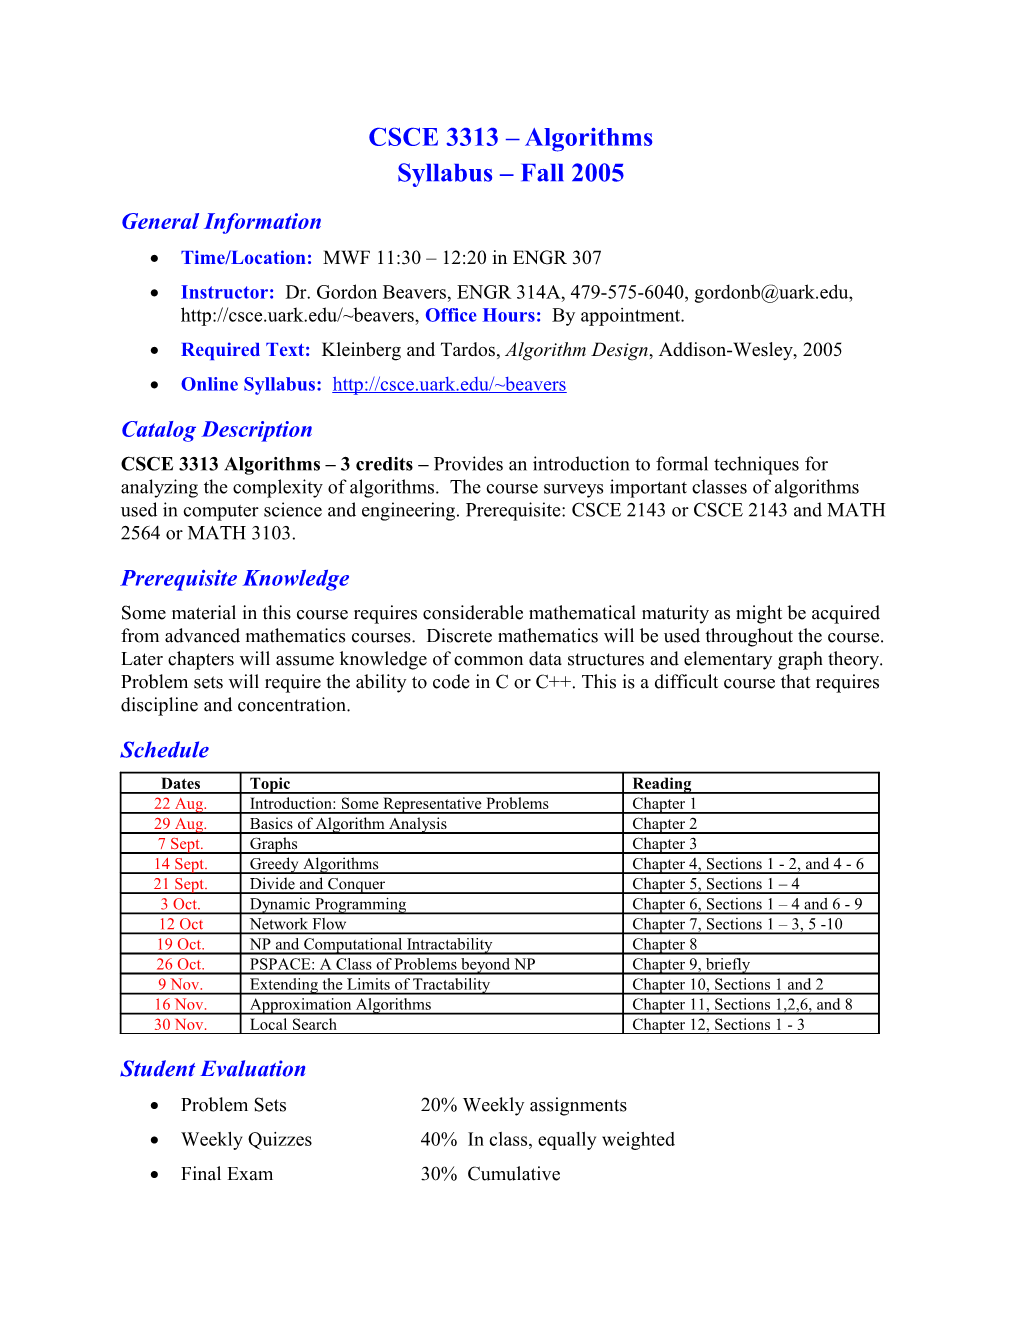 CSCE Course Assessment Workbook